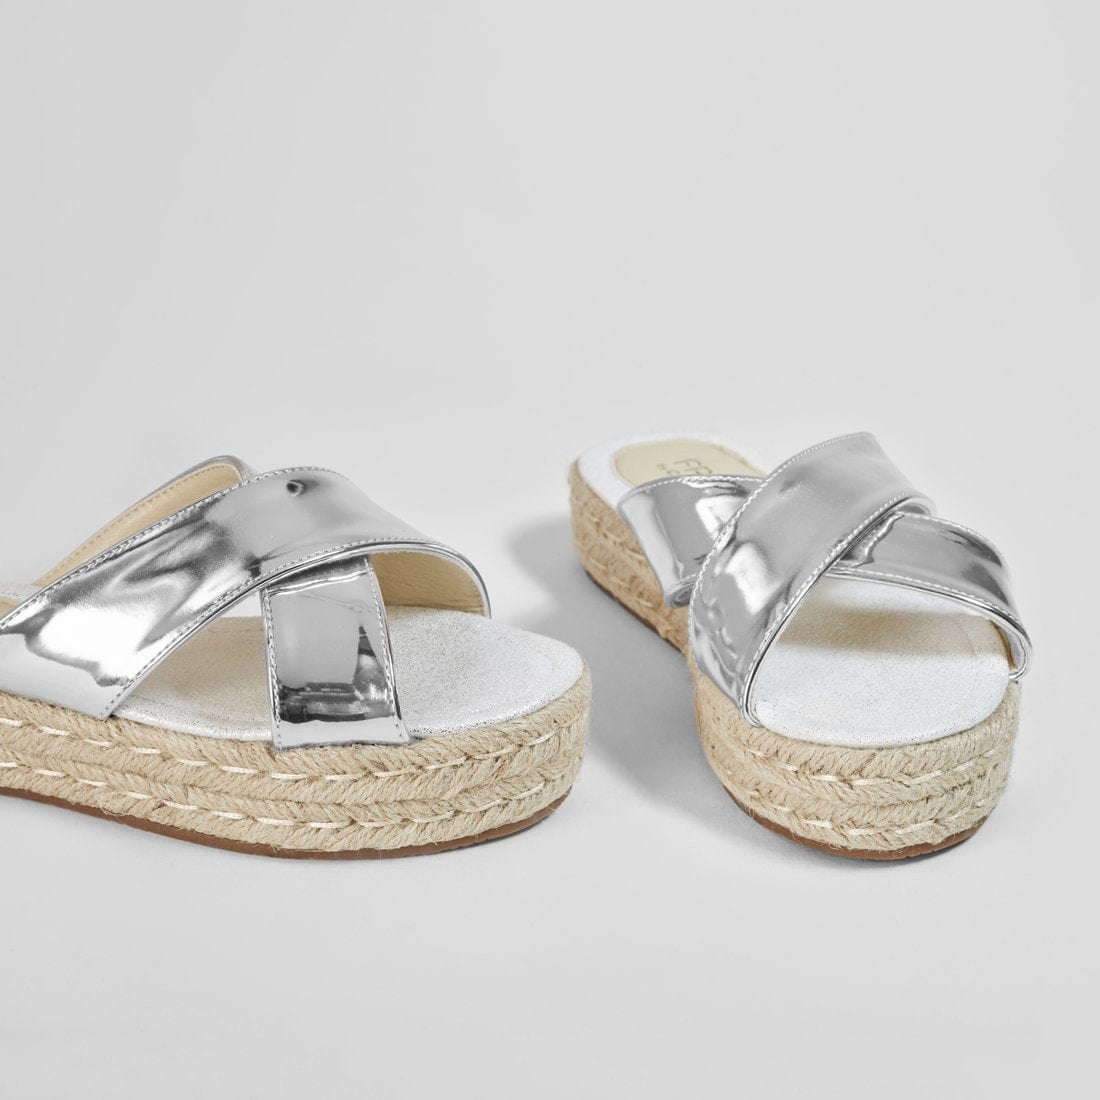 FRESAS CON NATA Shoes Girl's Silver Straps Crossed Mirror Sandals